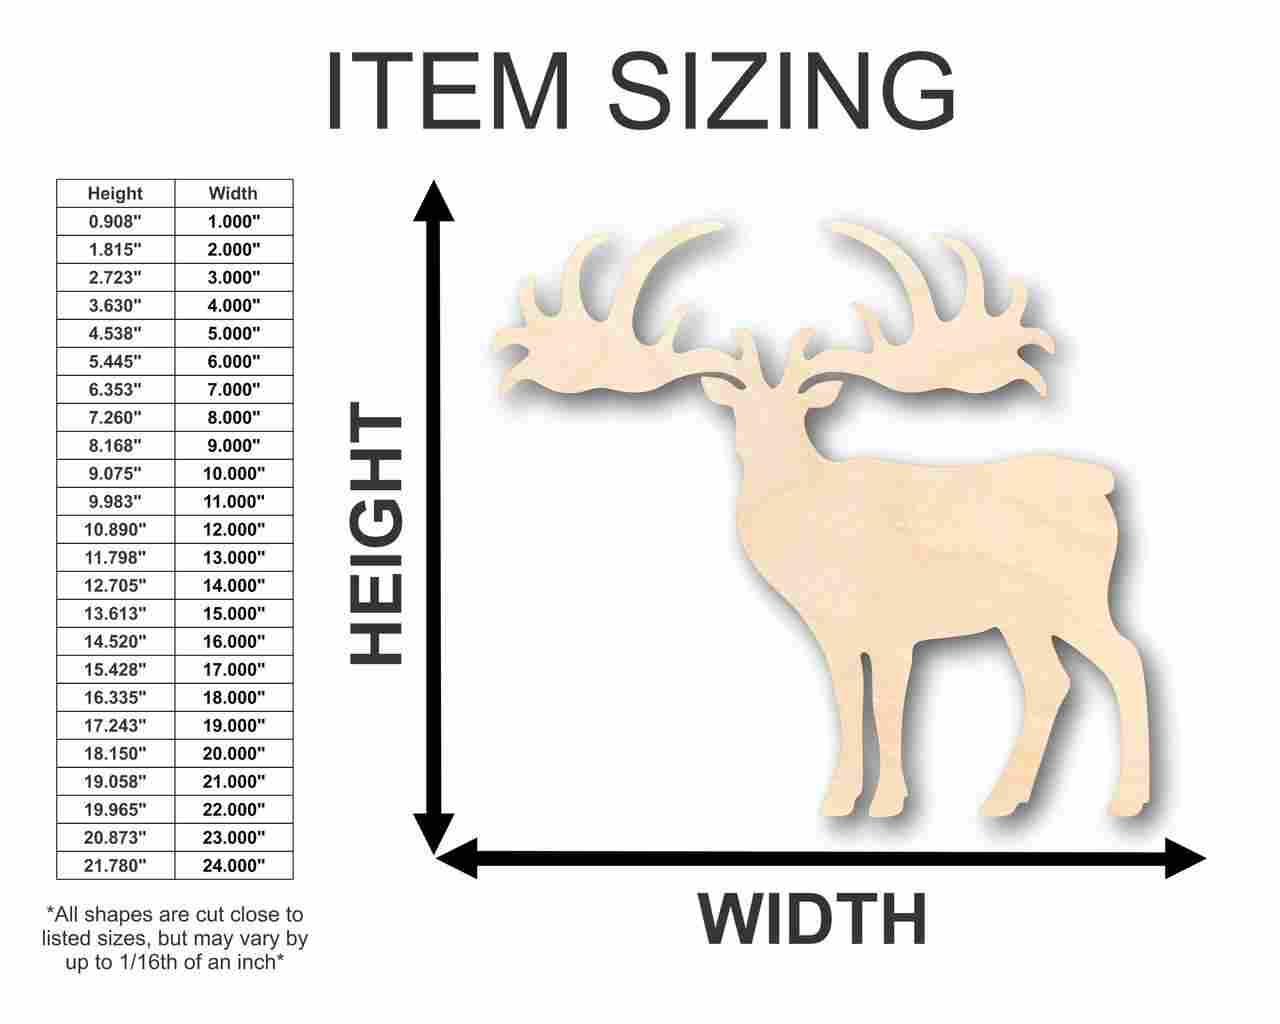 Unfinished Wooden Elk Shape - Animal - Wildlife - Craft - up to 24